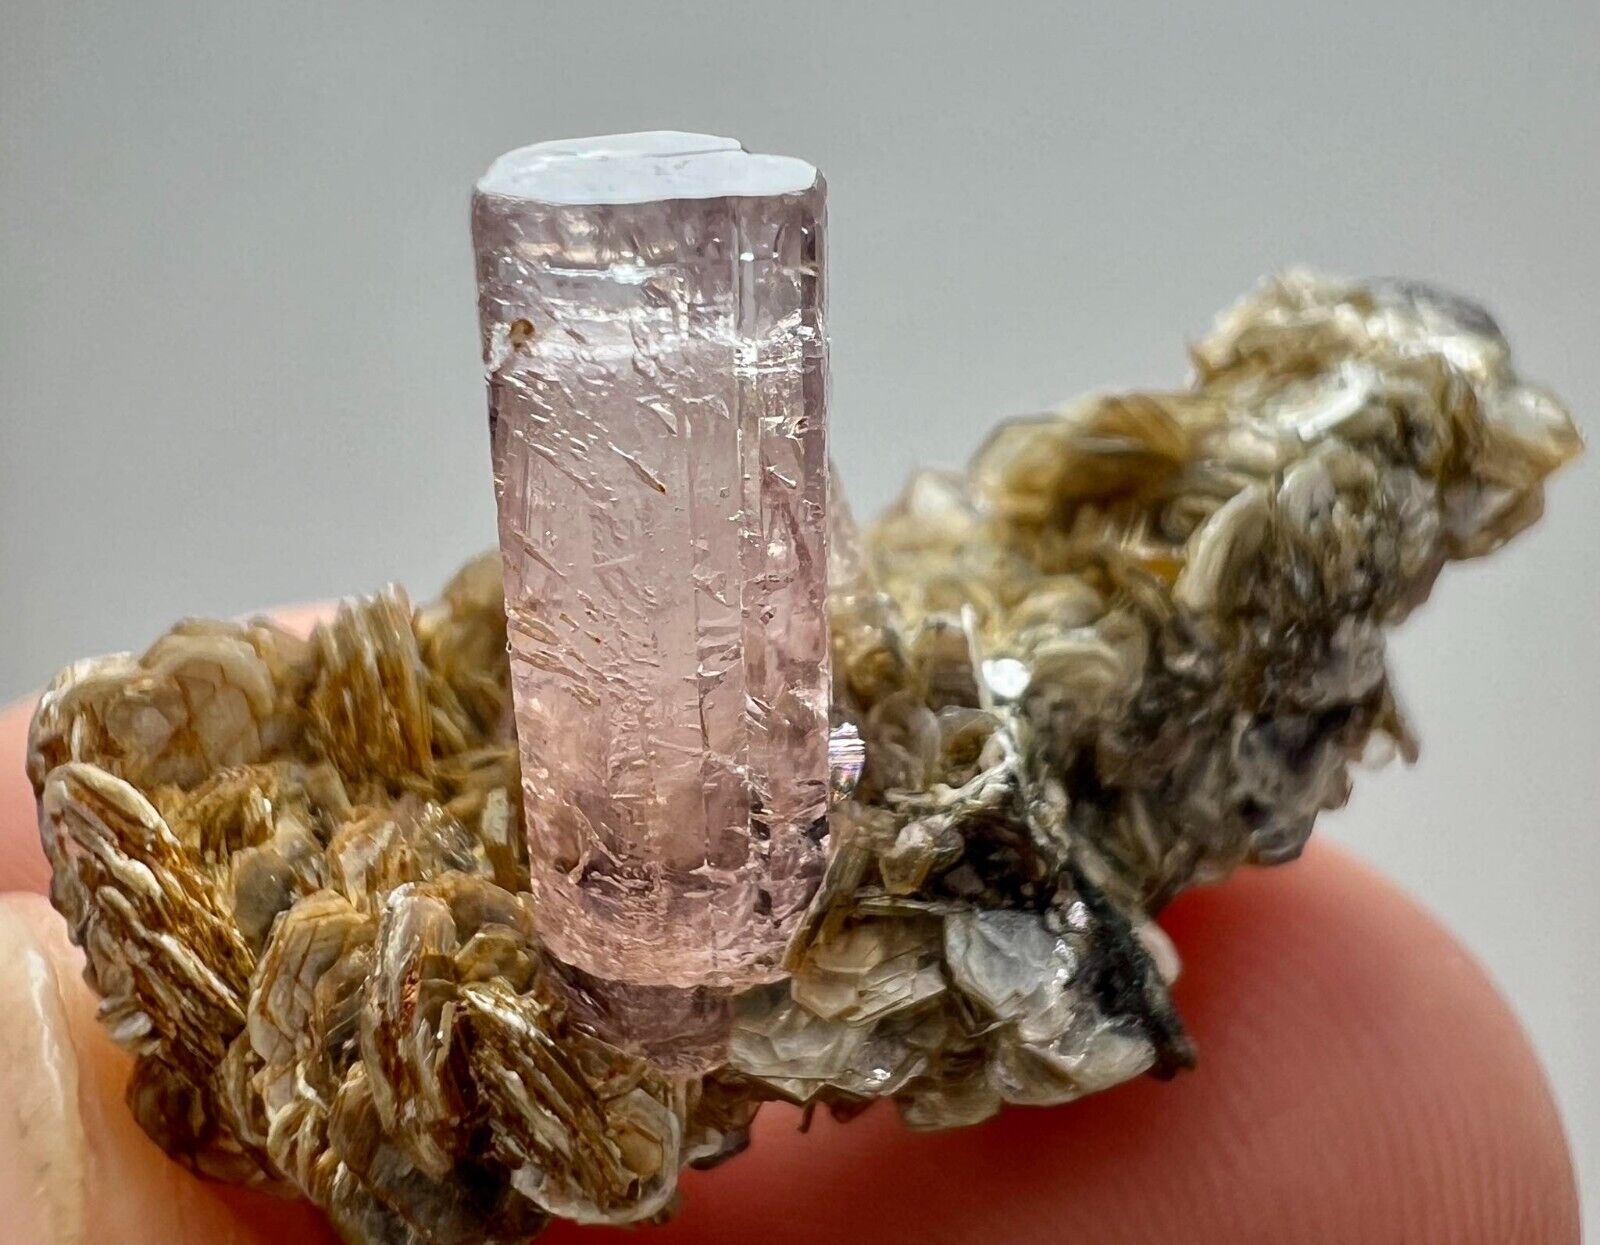 26 Carat Full Terminated Rare Pinkish Apatite Crystals On Matrix From Pakistan